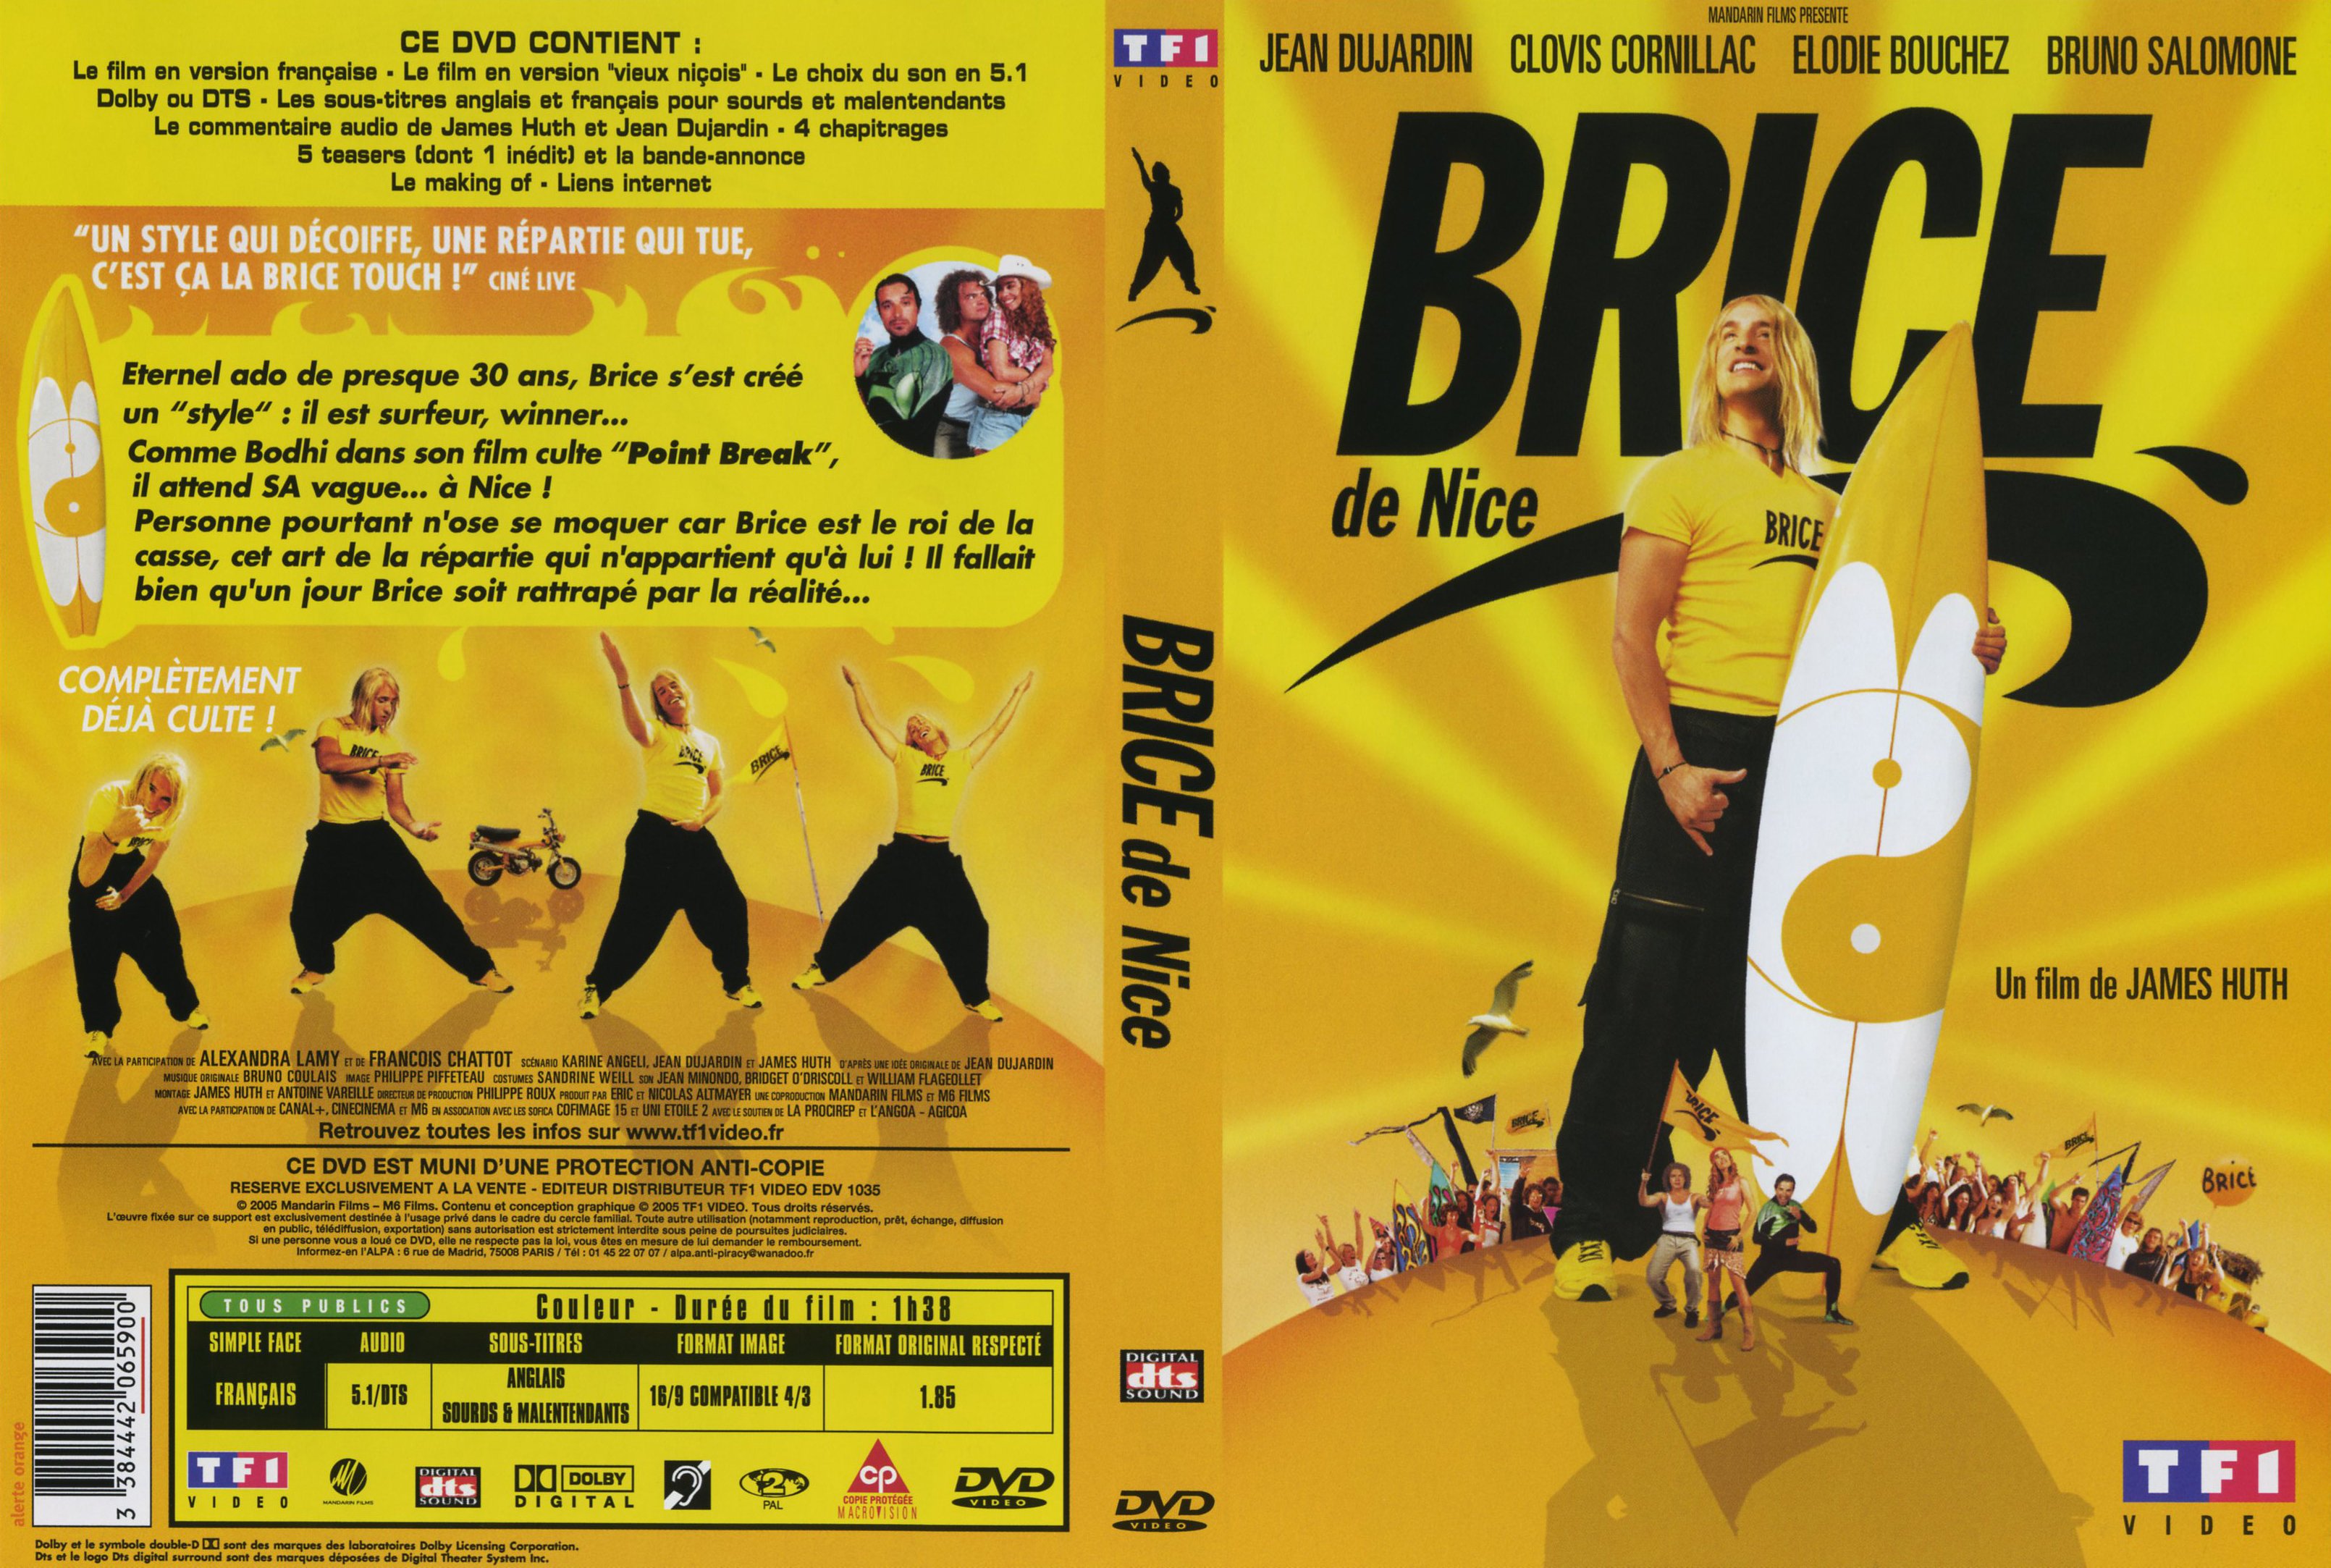 Jaquette DVD Brice de Nice v2